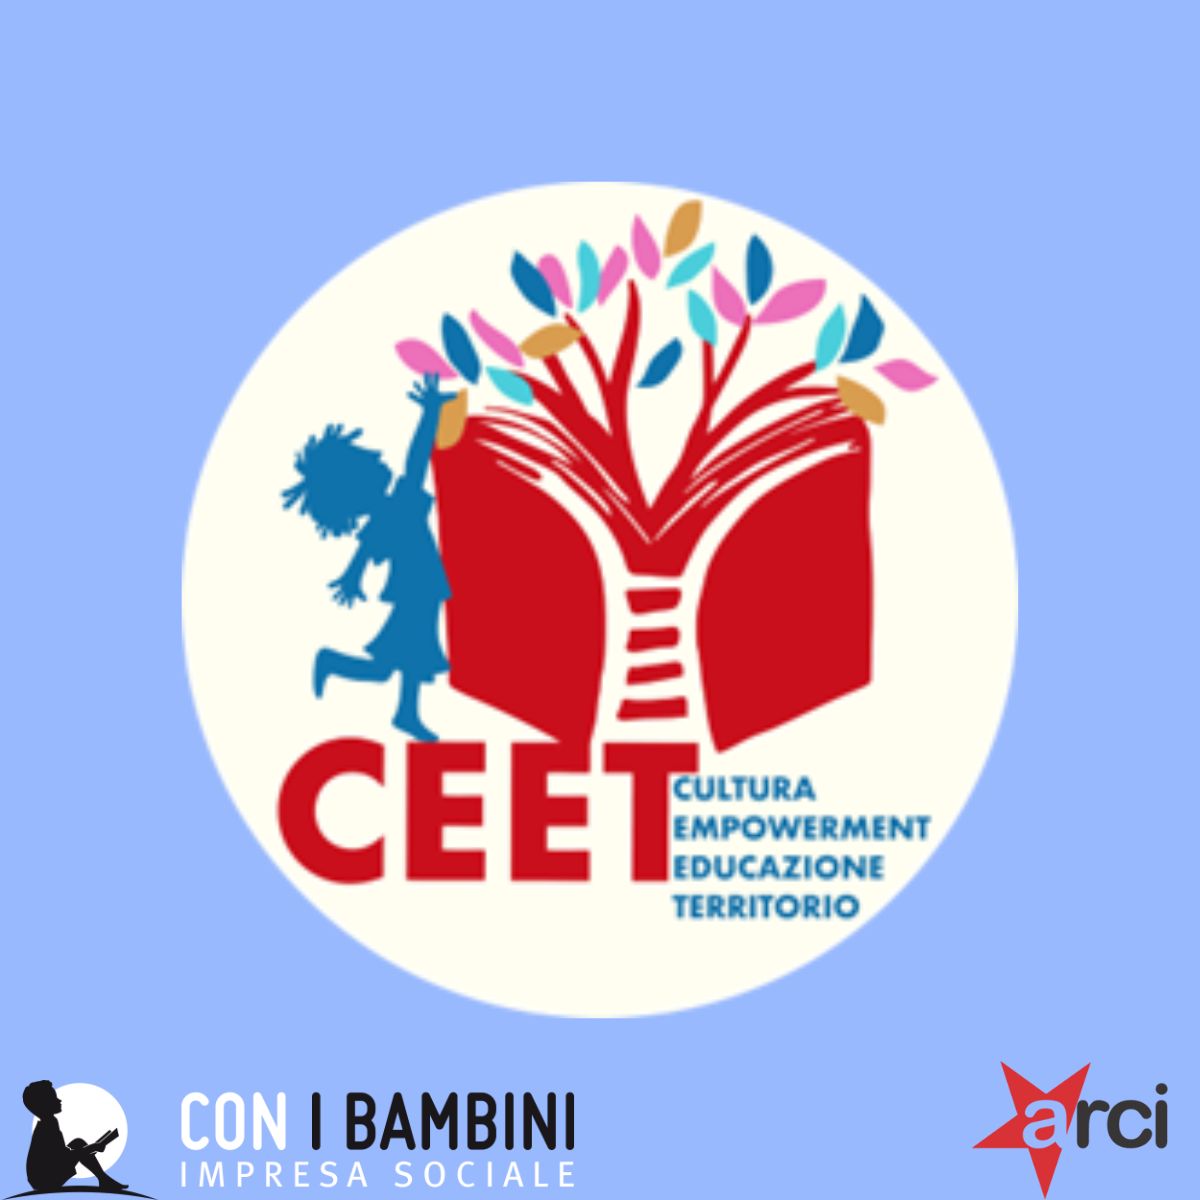 CEET – Cultura Educazione Empowerment e Territorio 